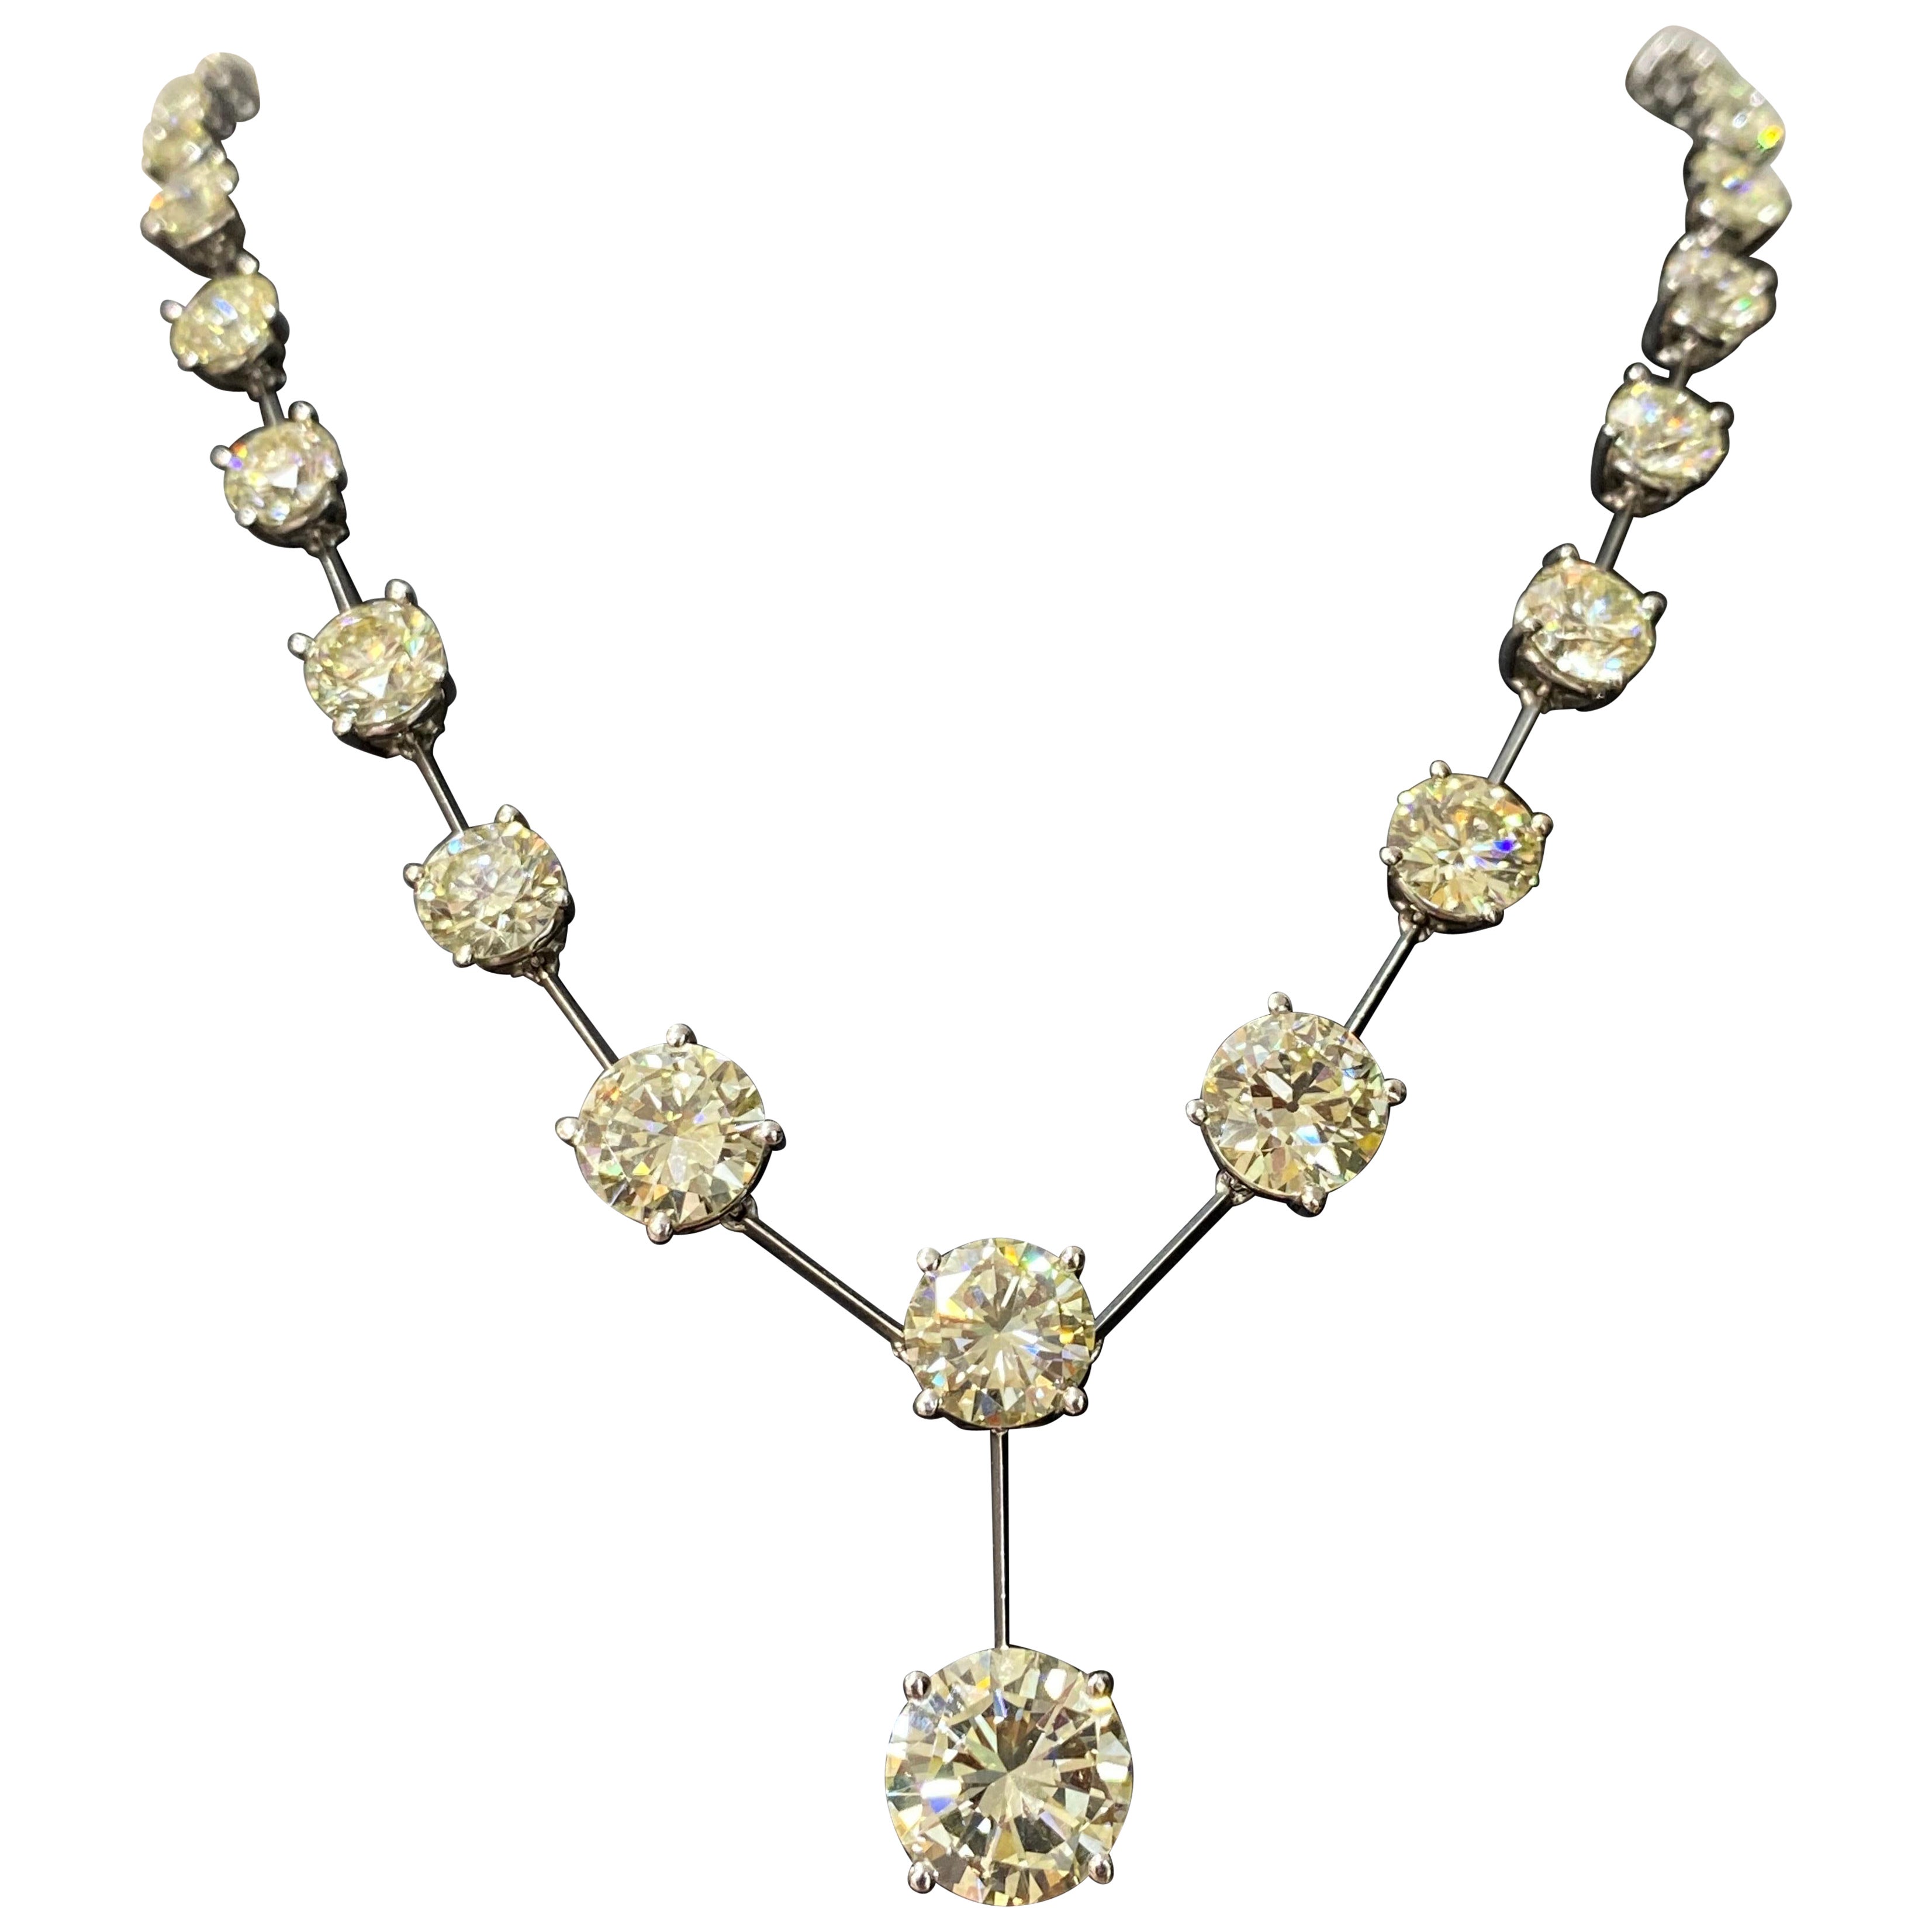 30.72 Carat Solitaire Diamond Necklace For Sale